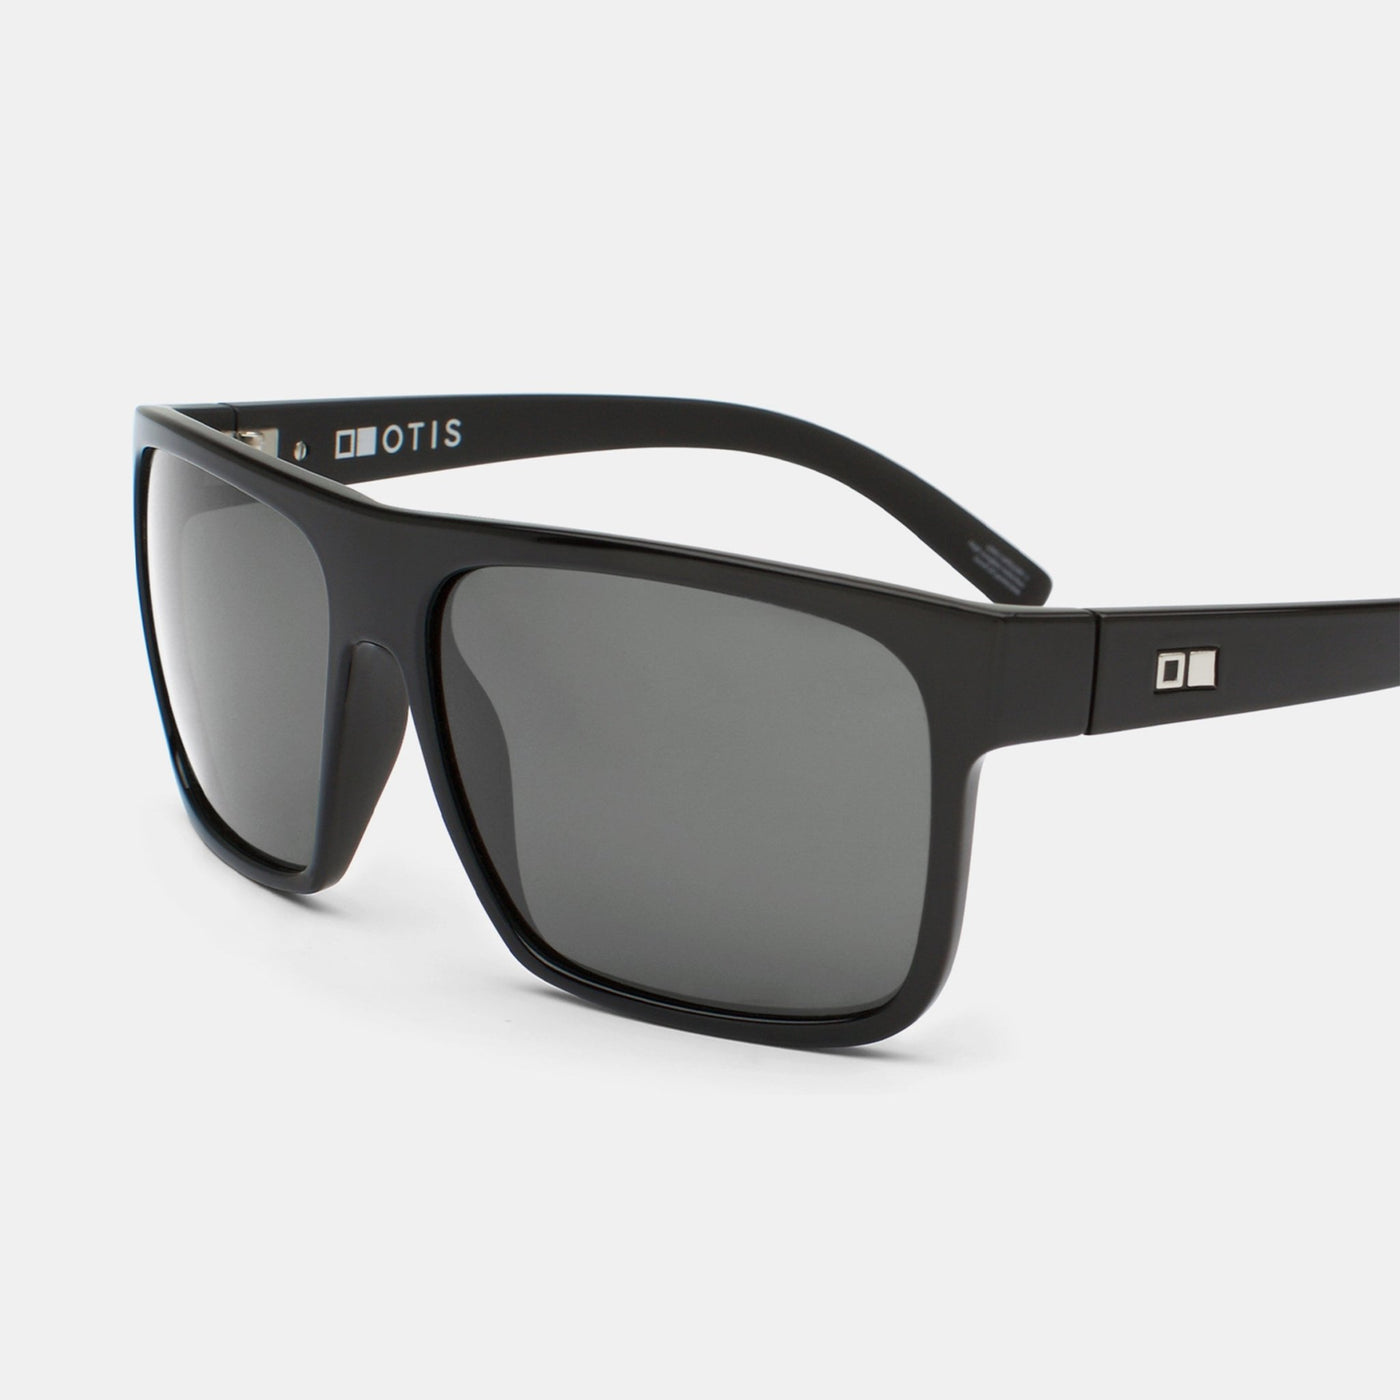 Black OTIS Eyewear sunglasses facing the side